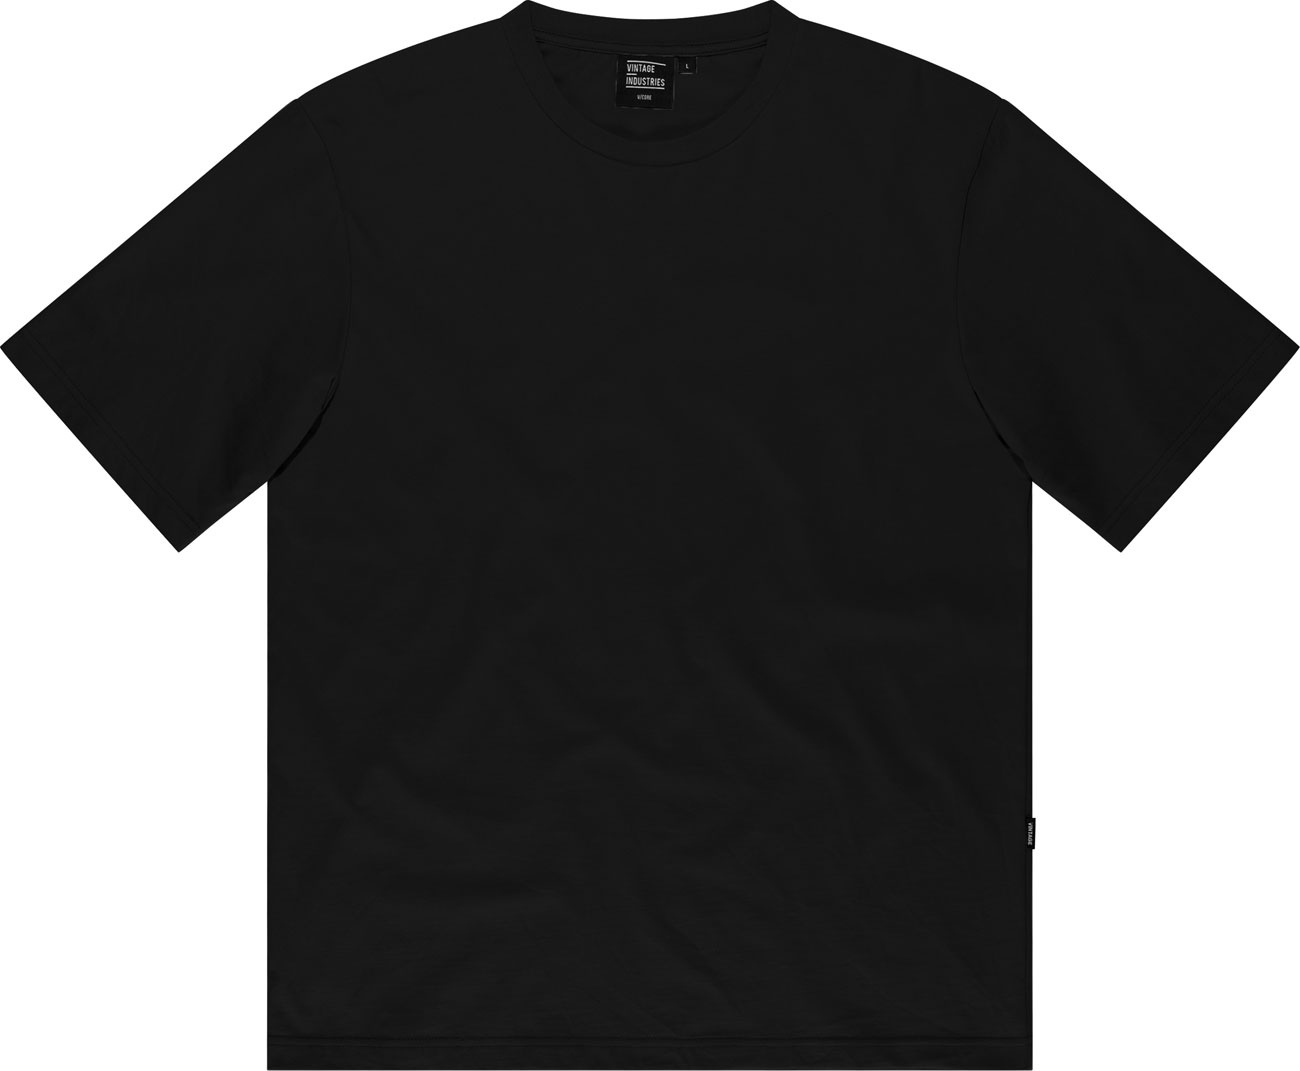 Vintage Industries Lex, t-shirt - Noir - XXL